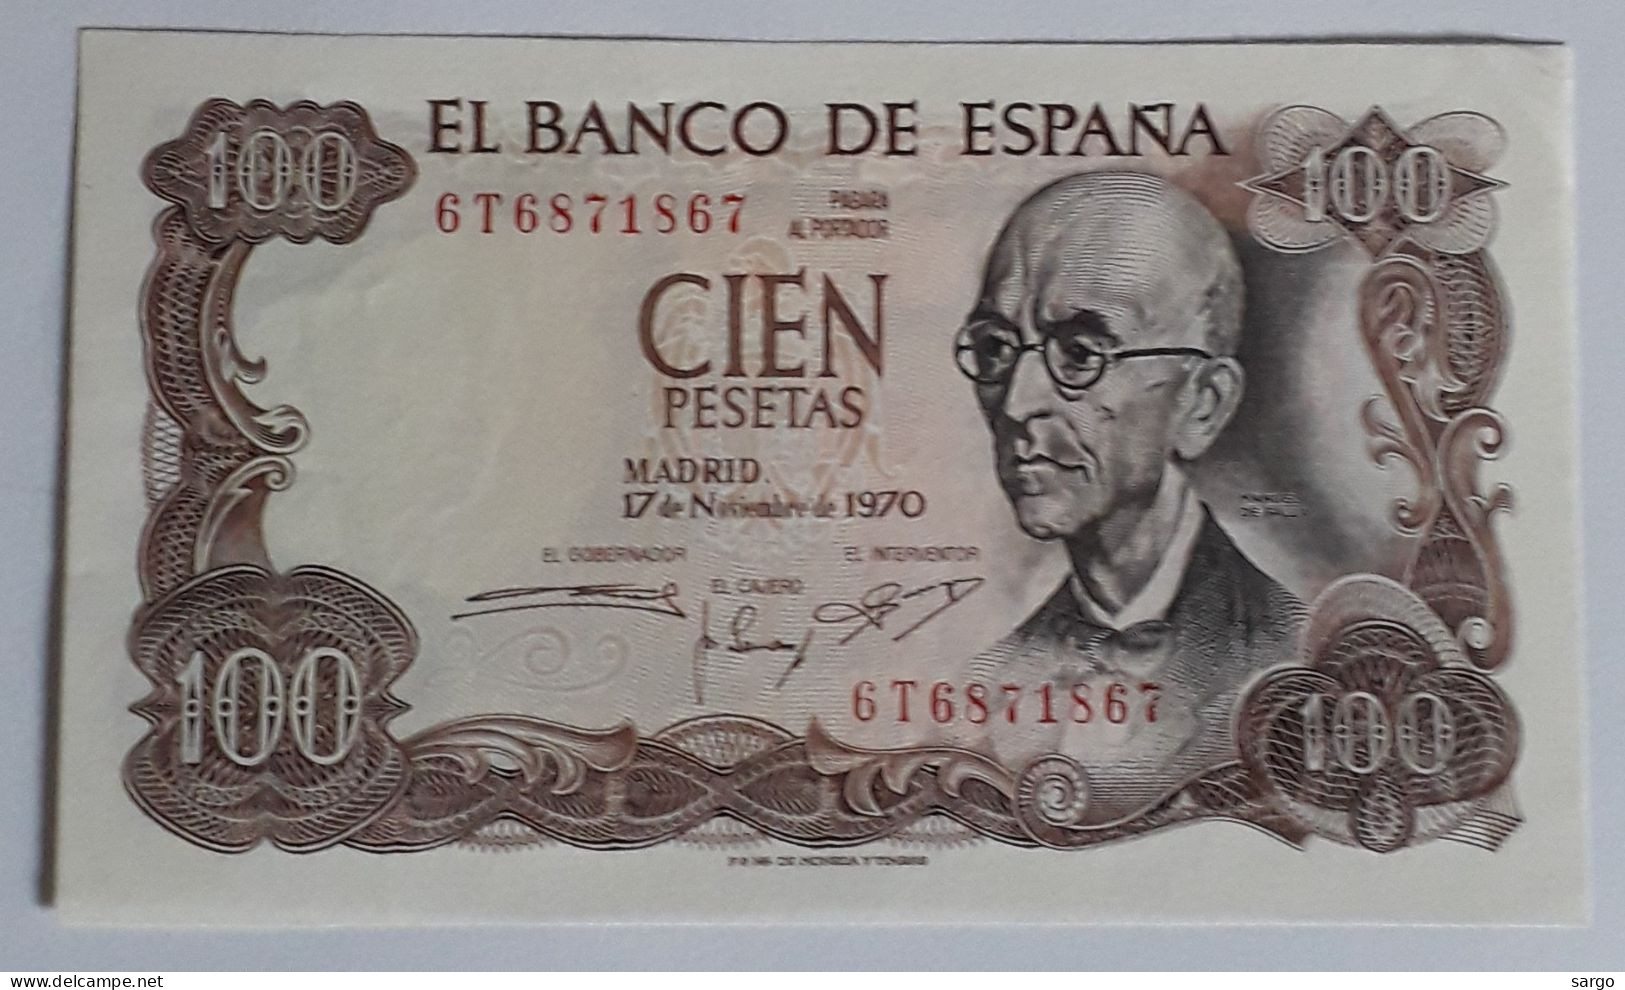 SPAIN  - 100 PESETAS - 1970  - UNC - P 152 - BANKNOTES - PAPER MONEY - CARTAMONETA - - 100 Pesetas